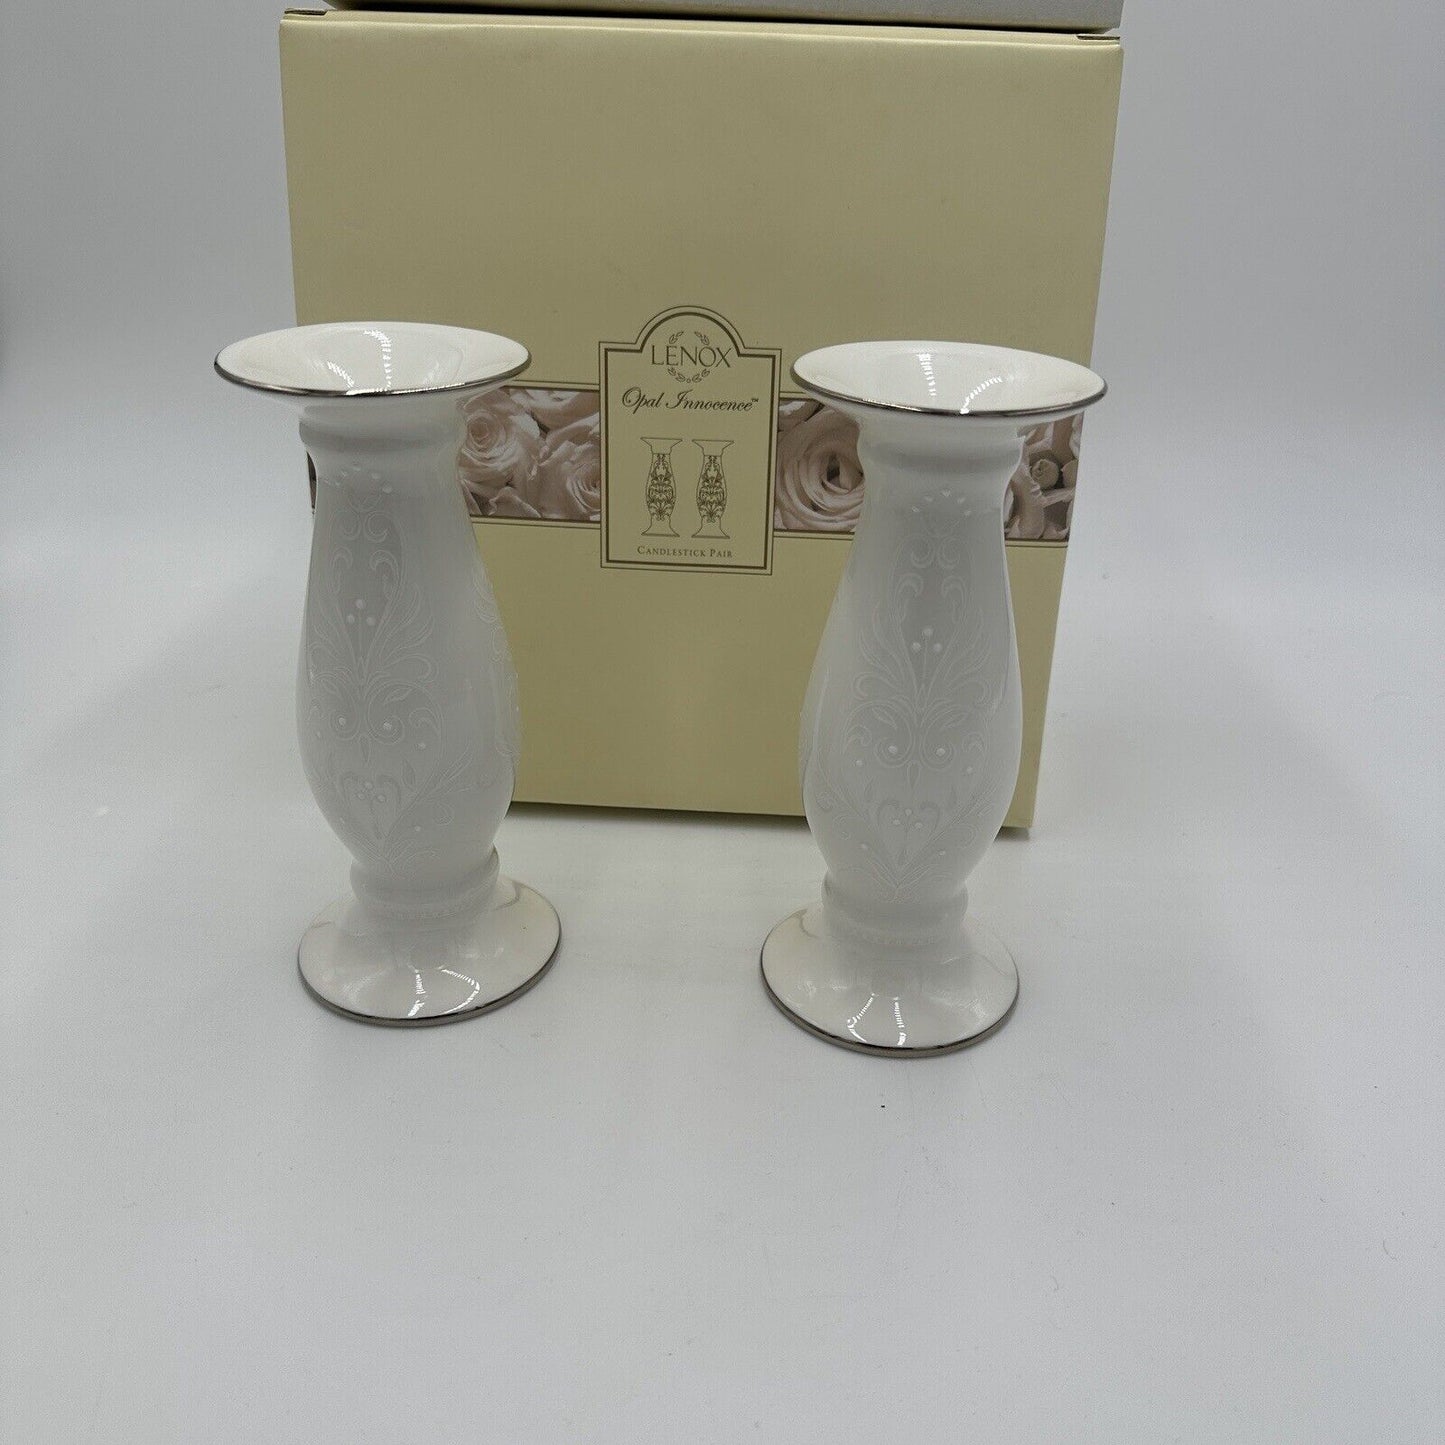 Lenox Porcelain White Opal Innocence Candlesticks Set Table Decor Home Dining